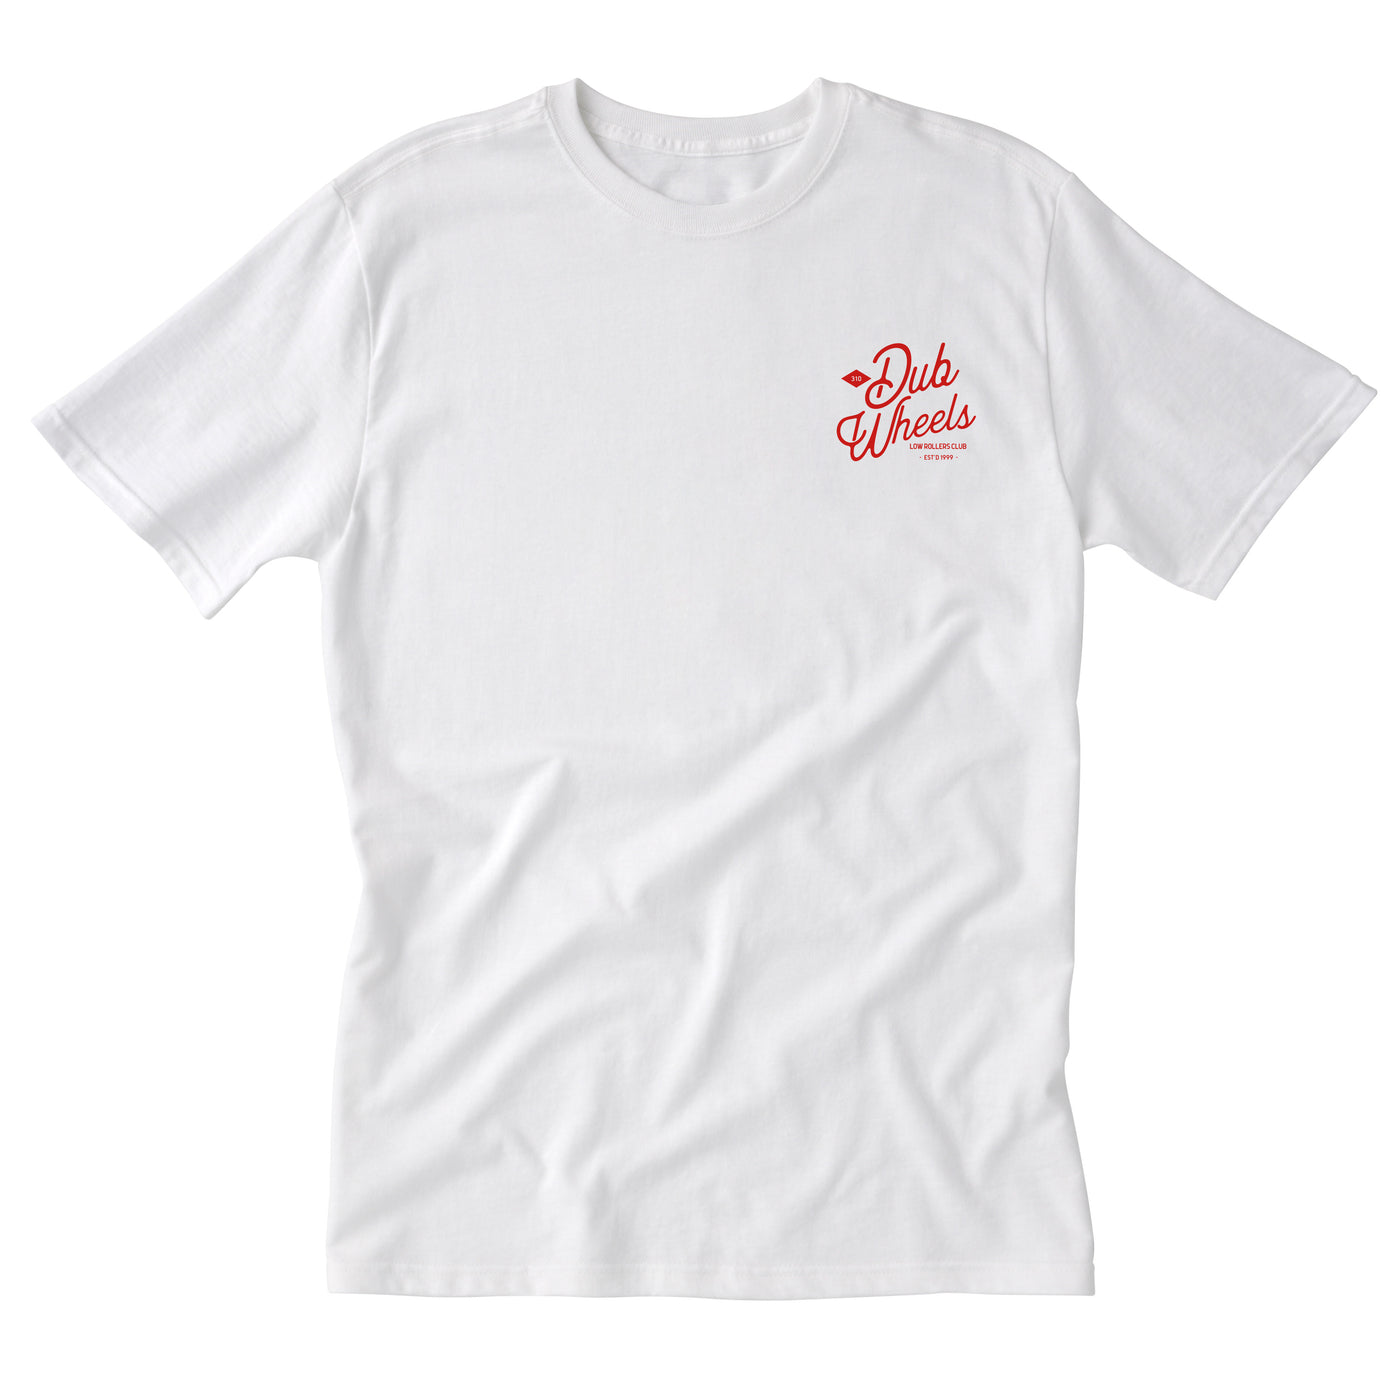 Dub Low Rollers Club T-Shirt - White